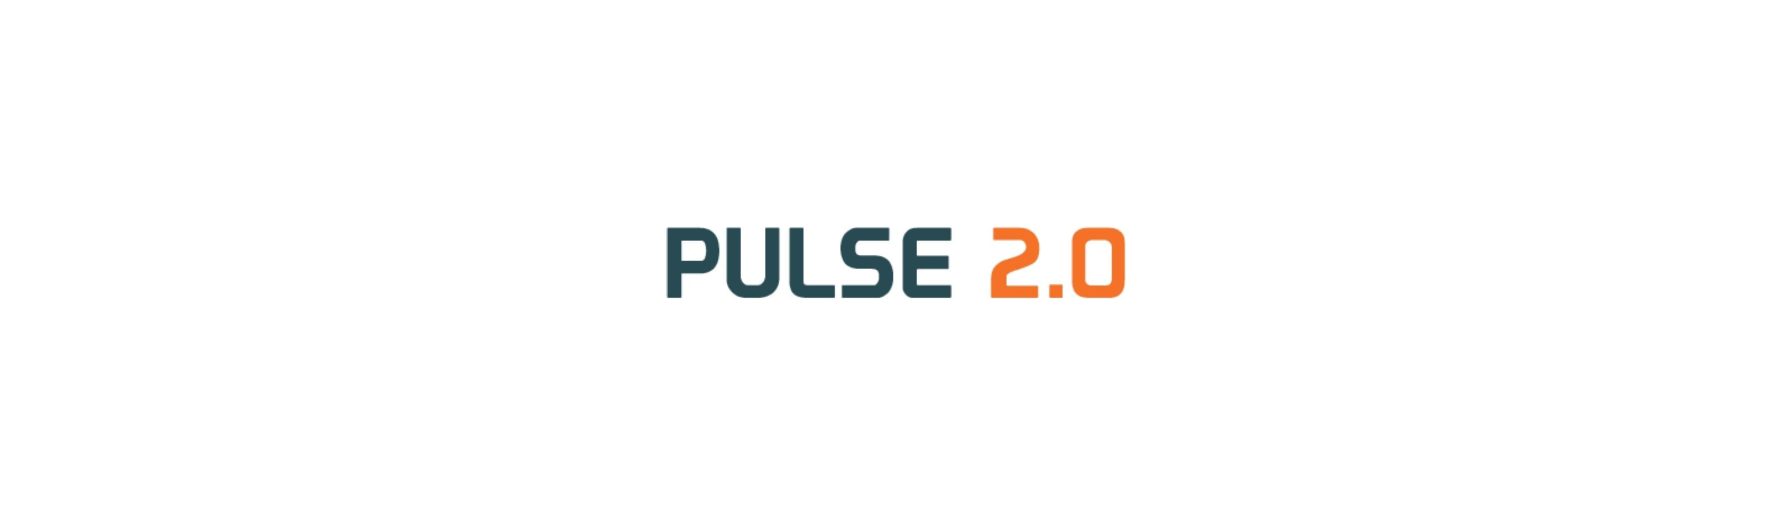  Pulse 2.0 logo